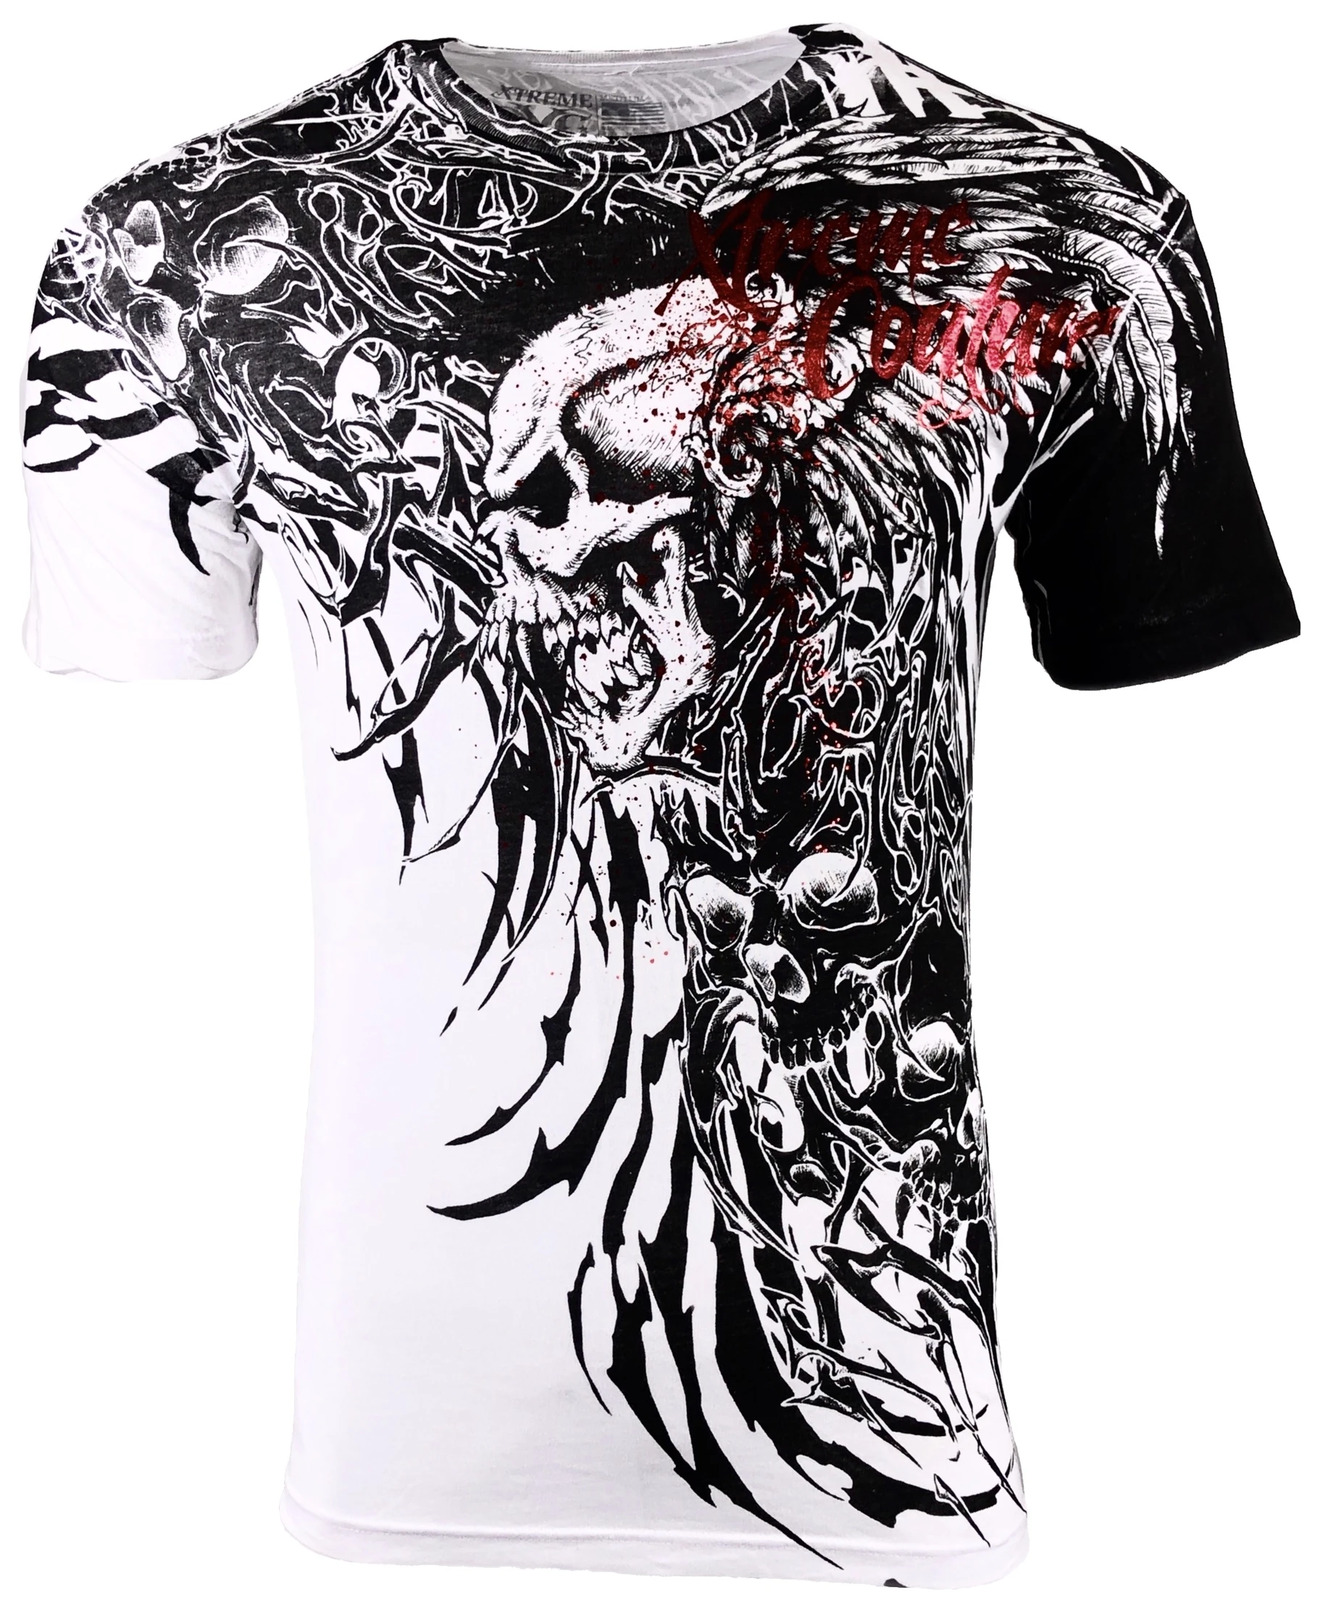 Xtreme Couture Affliction Men's T-Shirt BRUTAL COMBAT White Skull Biker Tattoo